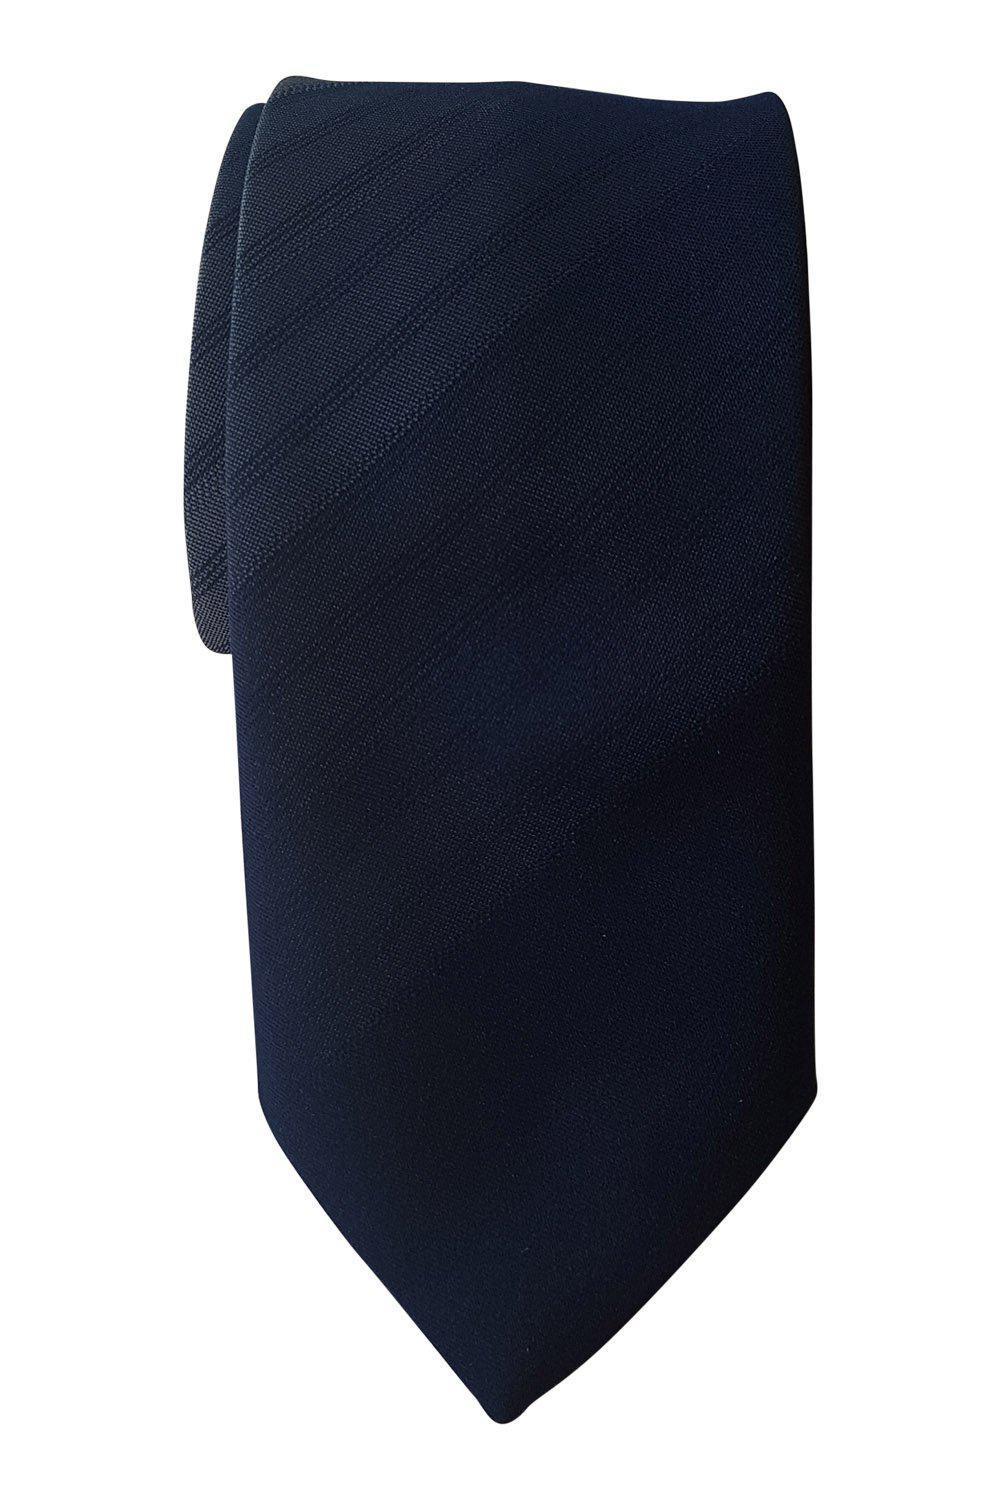 JOSE PISCADOR Navy Blue Polyester Classic Stripe Tie (57")-Jose Pisacdor-The Freperie